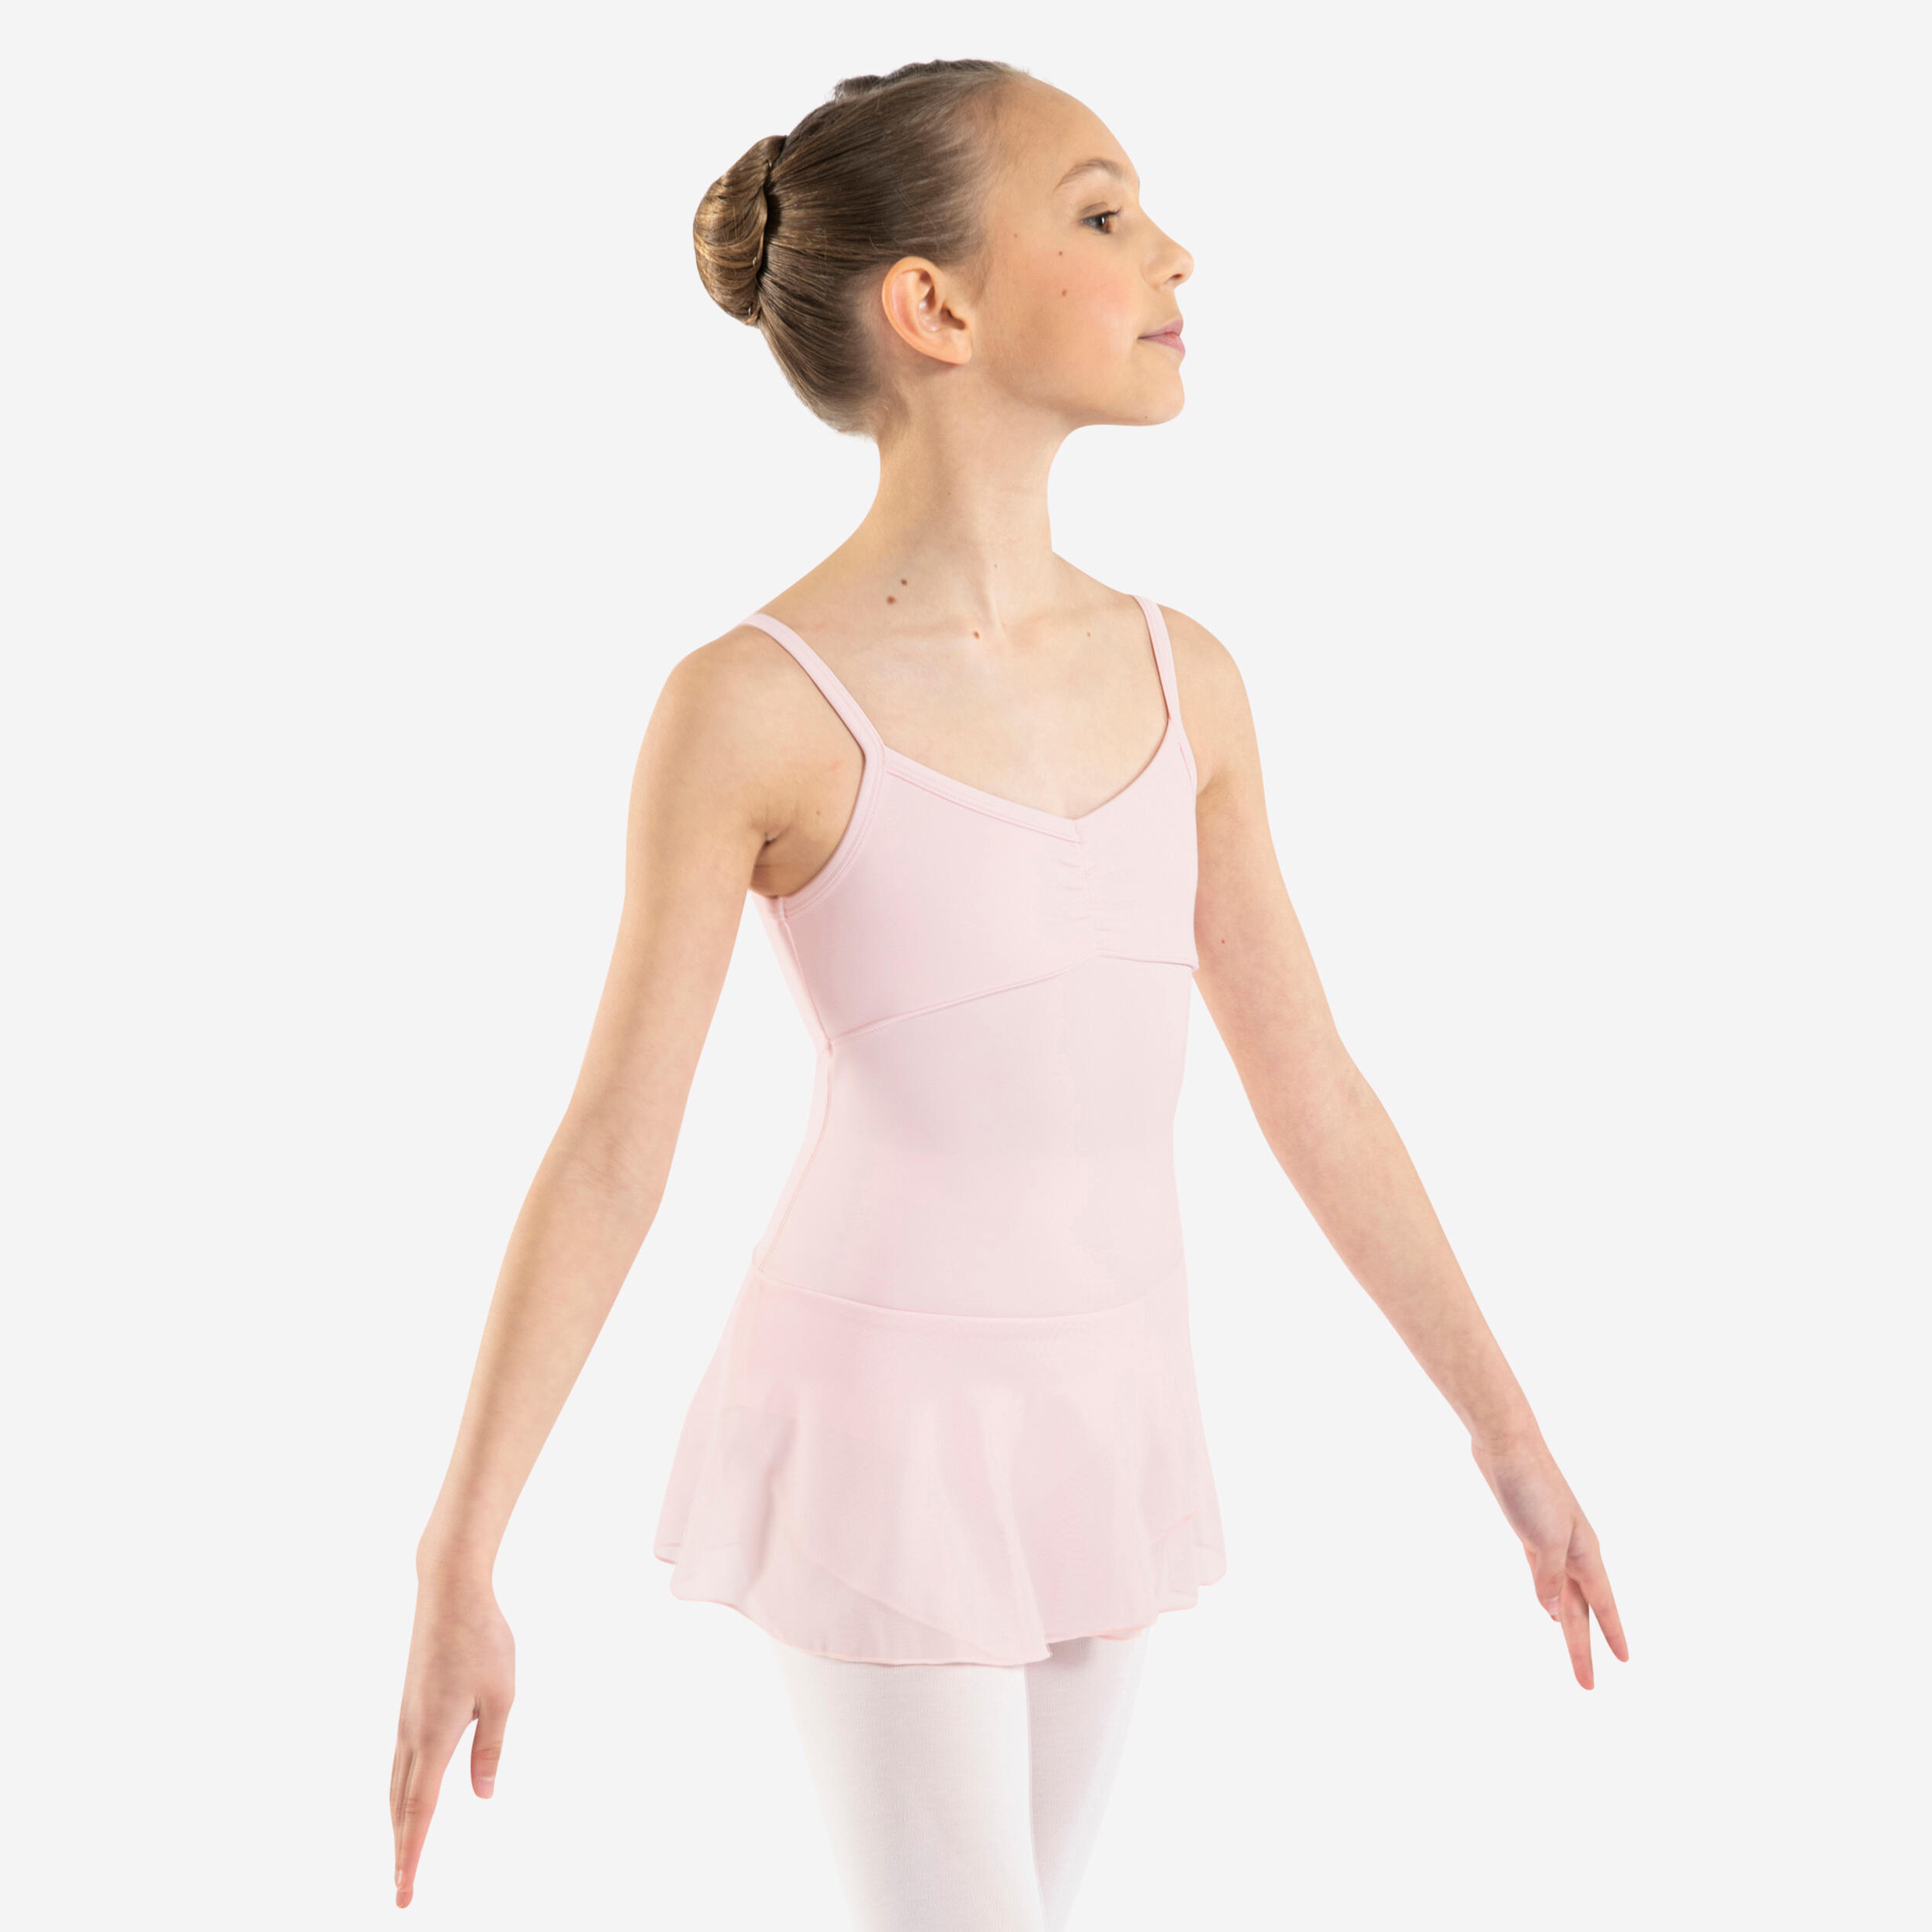 STAREVER Girls' Ballet Skirted Leotard - Pale Pink